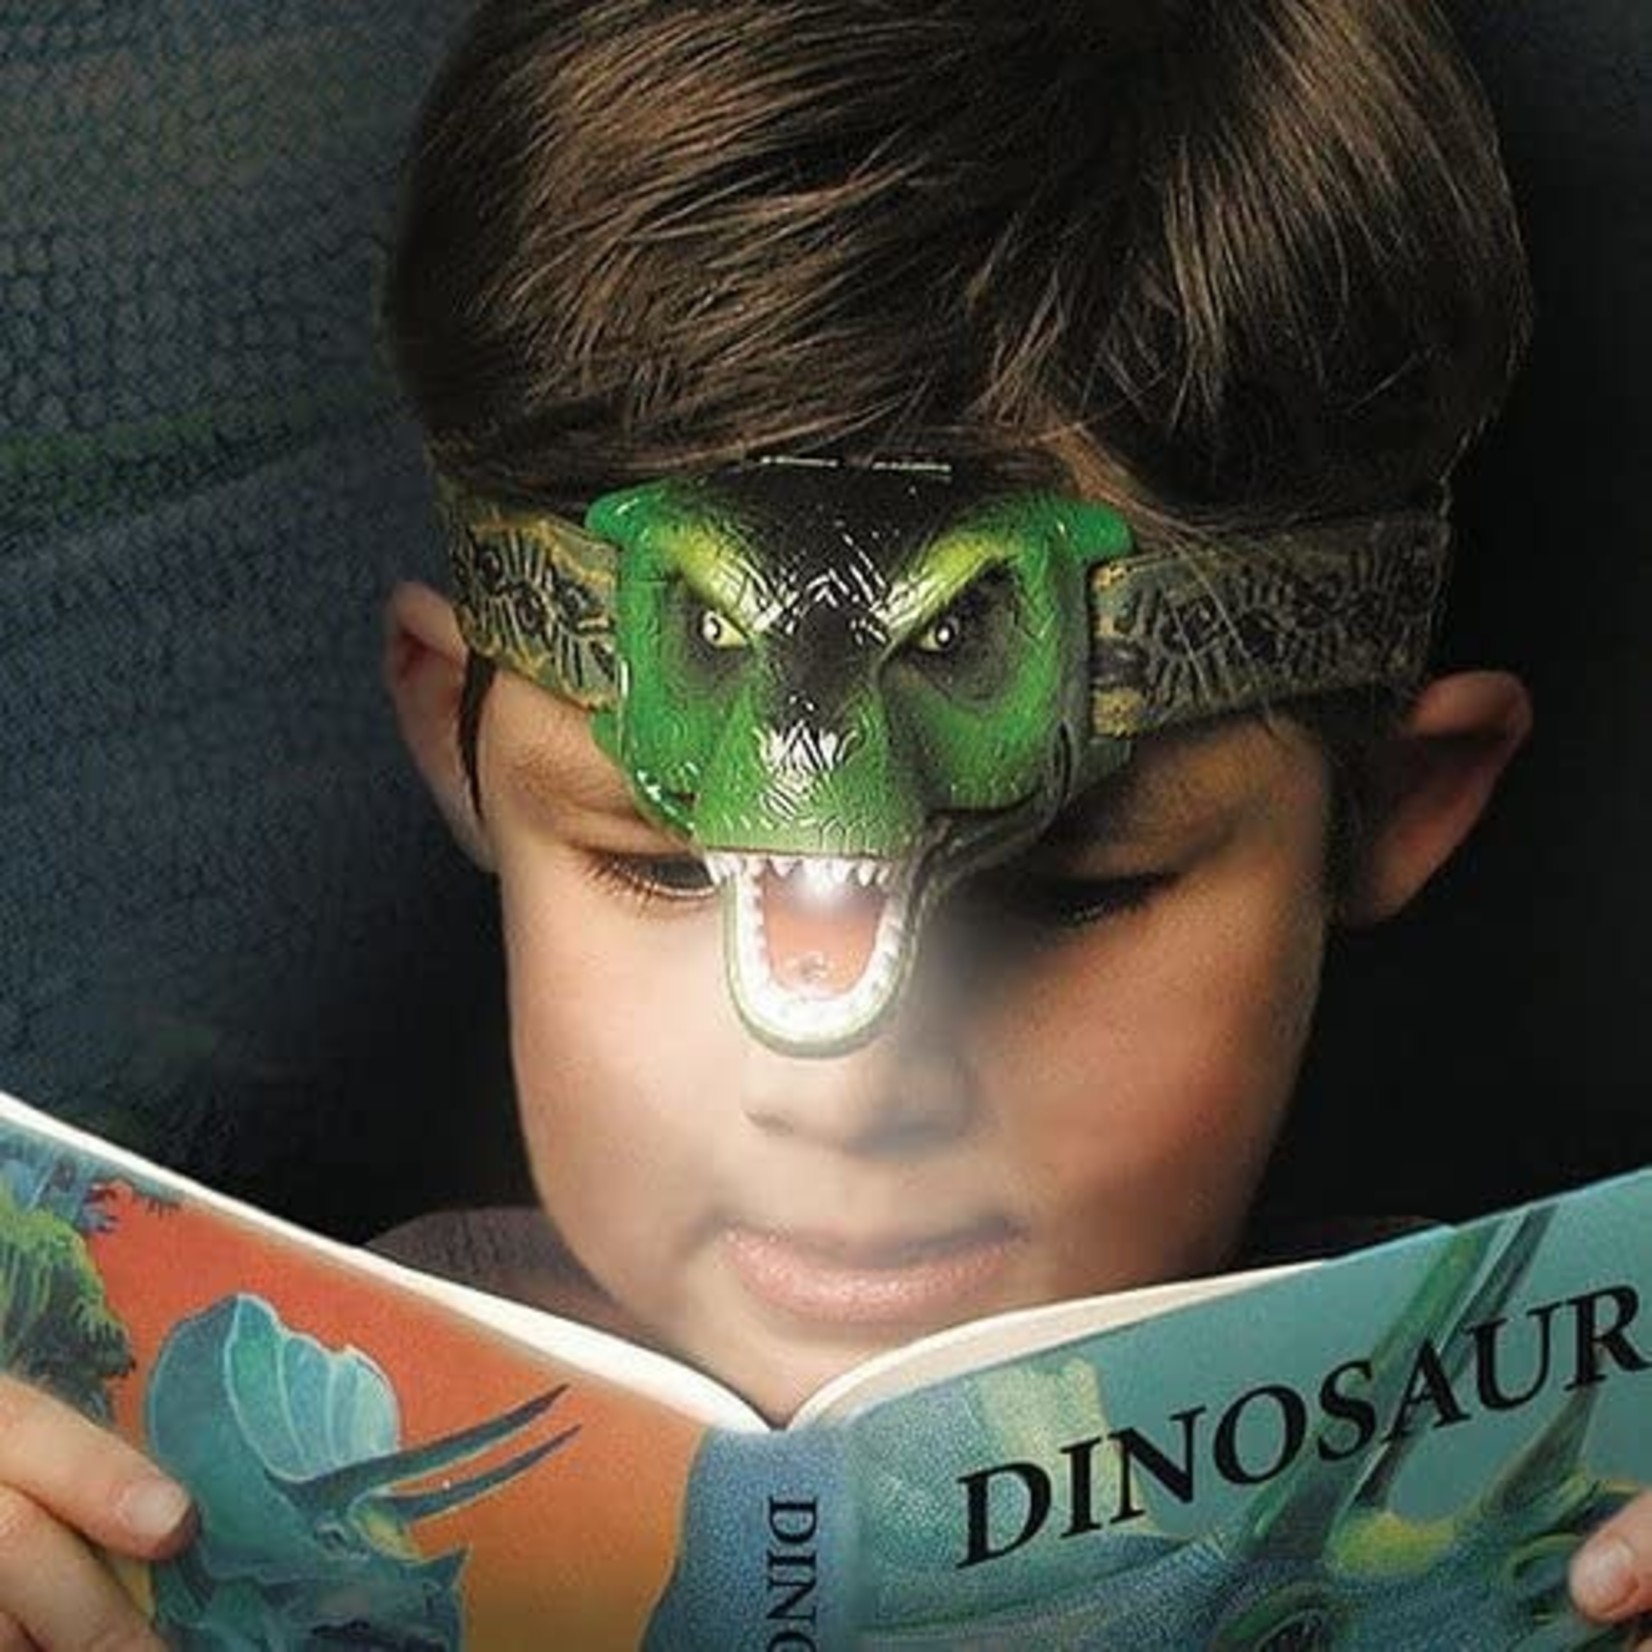 DynoBryte Dinosaur Headlamp - T-Rex Toy Headlight for Kids